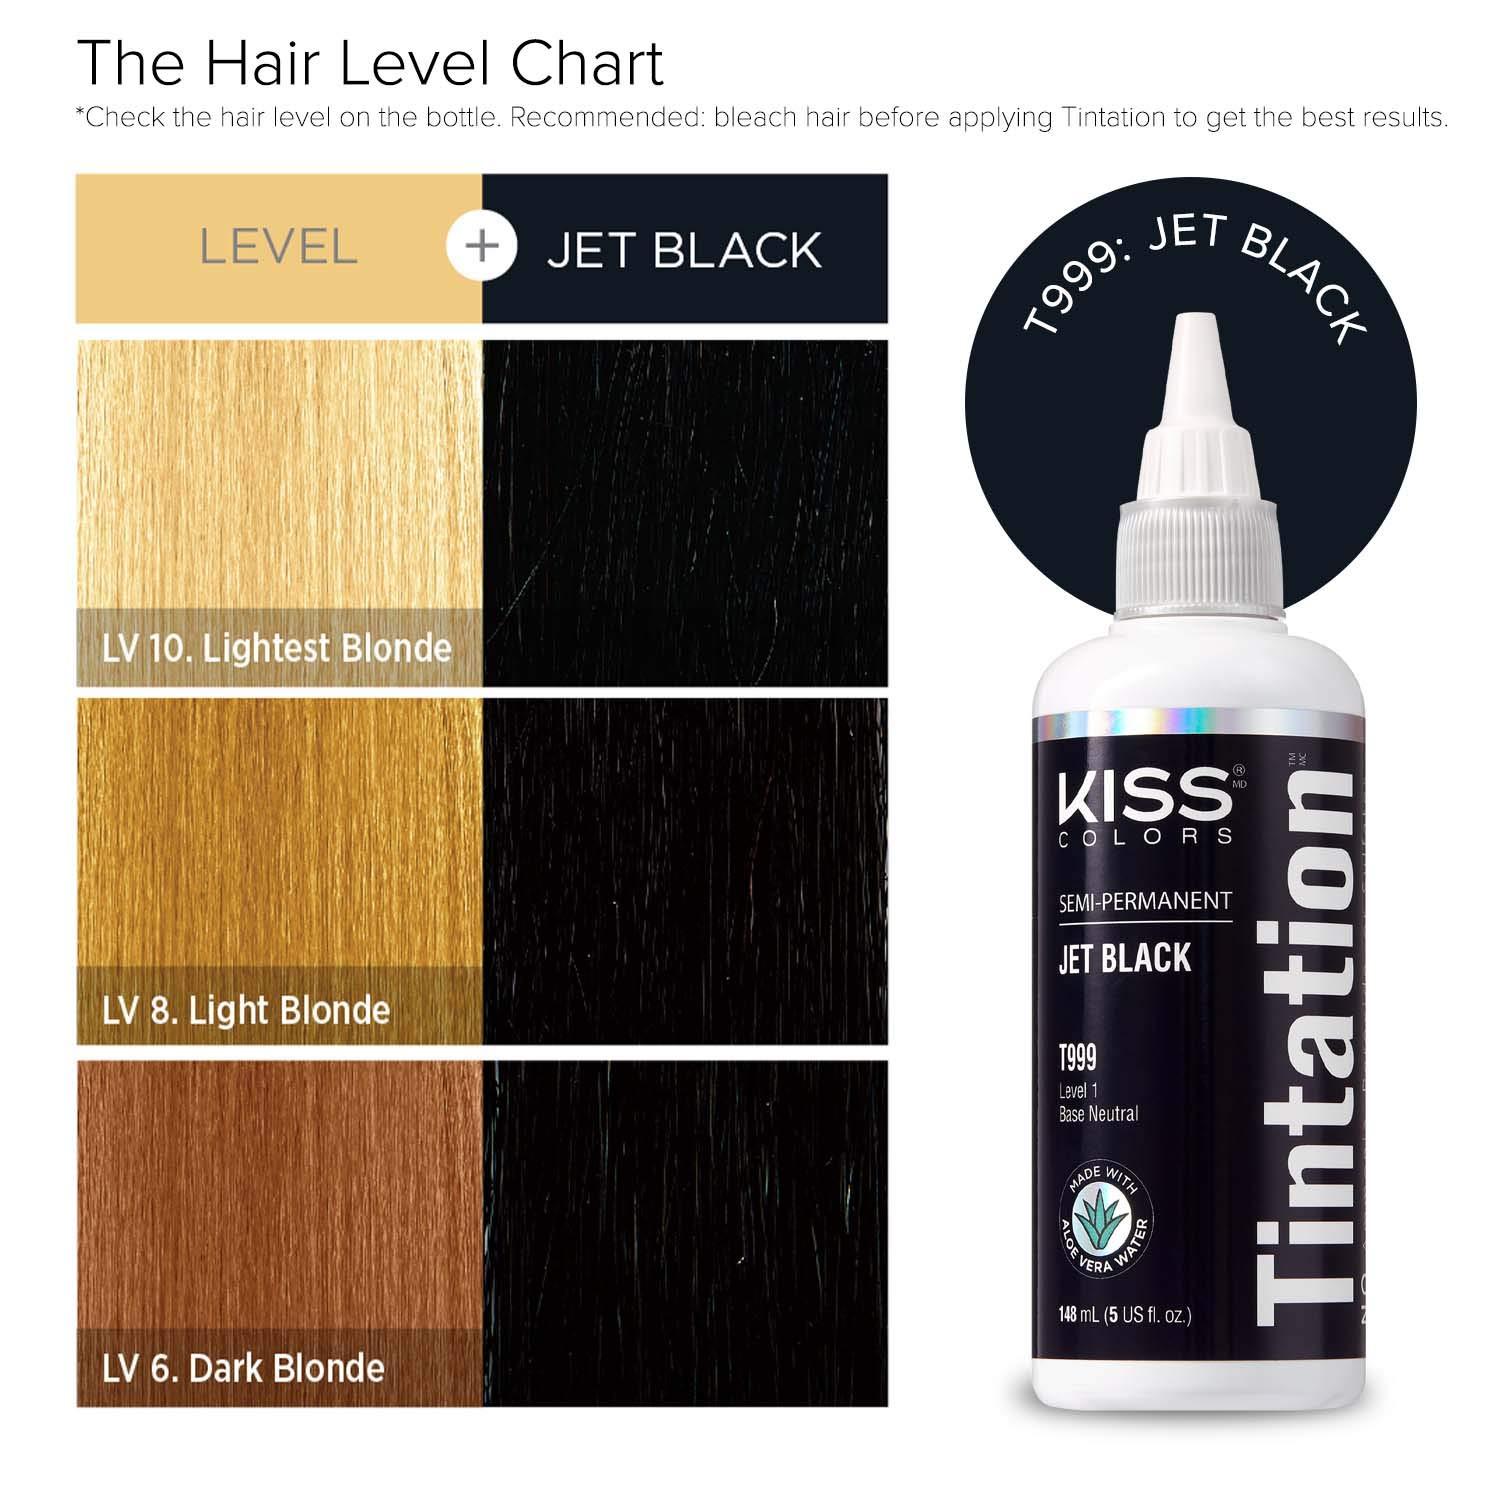 Kiss Tintation Semi-Permanent Hair Color 5 Ounce (Jet Black (2 Pack))